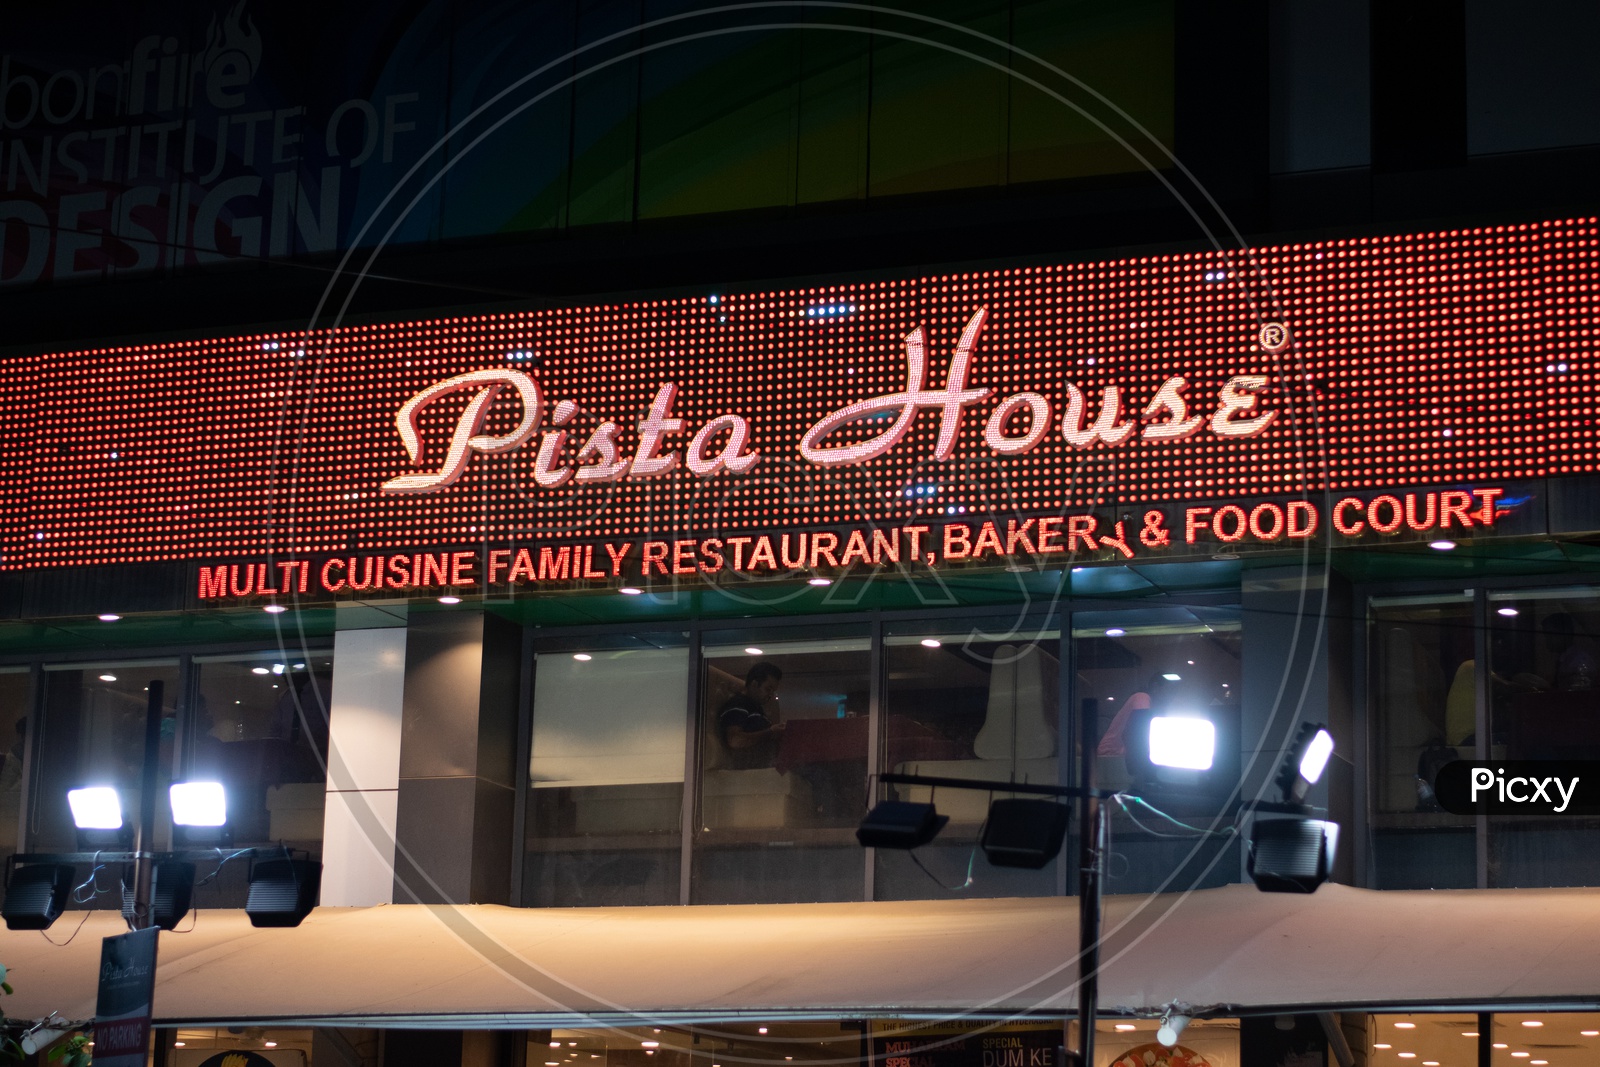 Pista House Restaurant